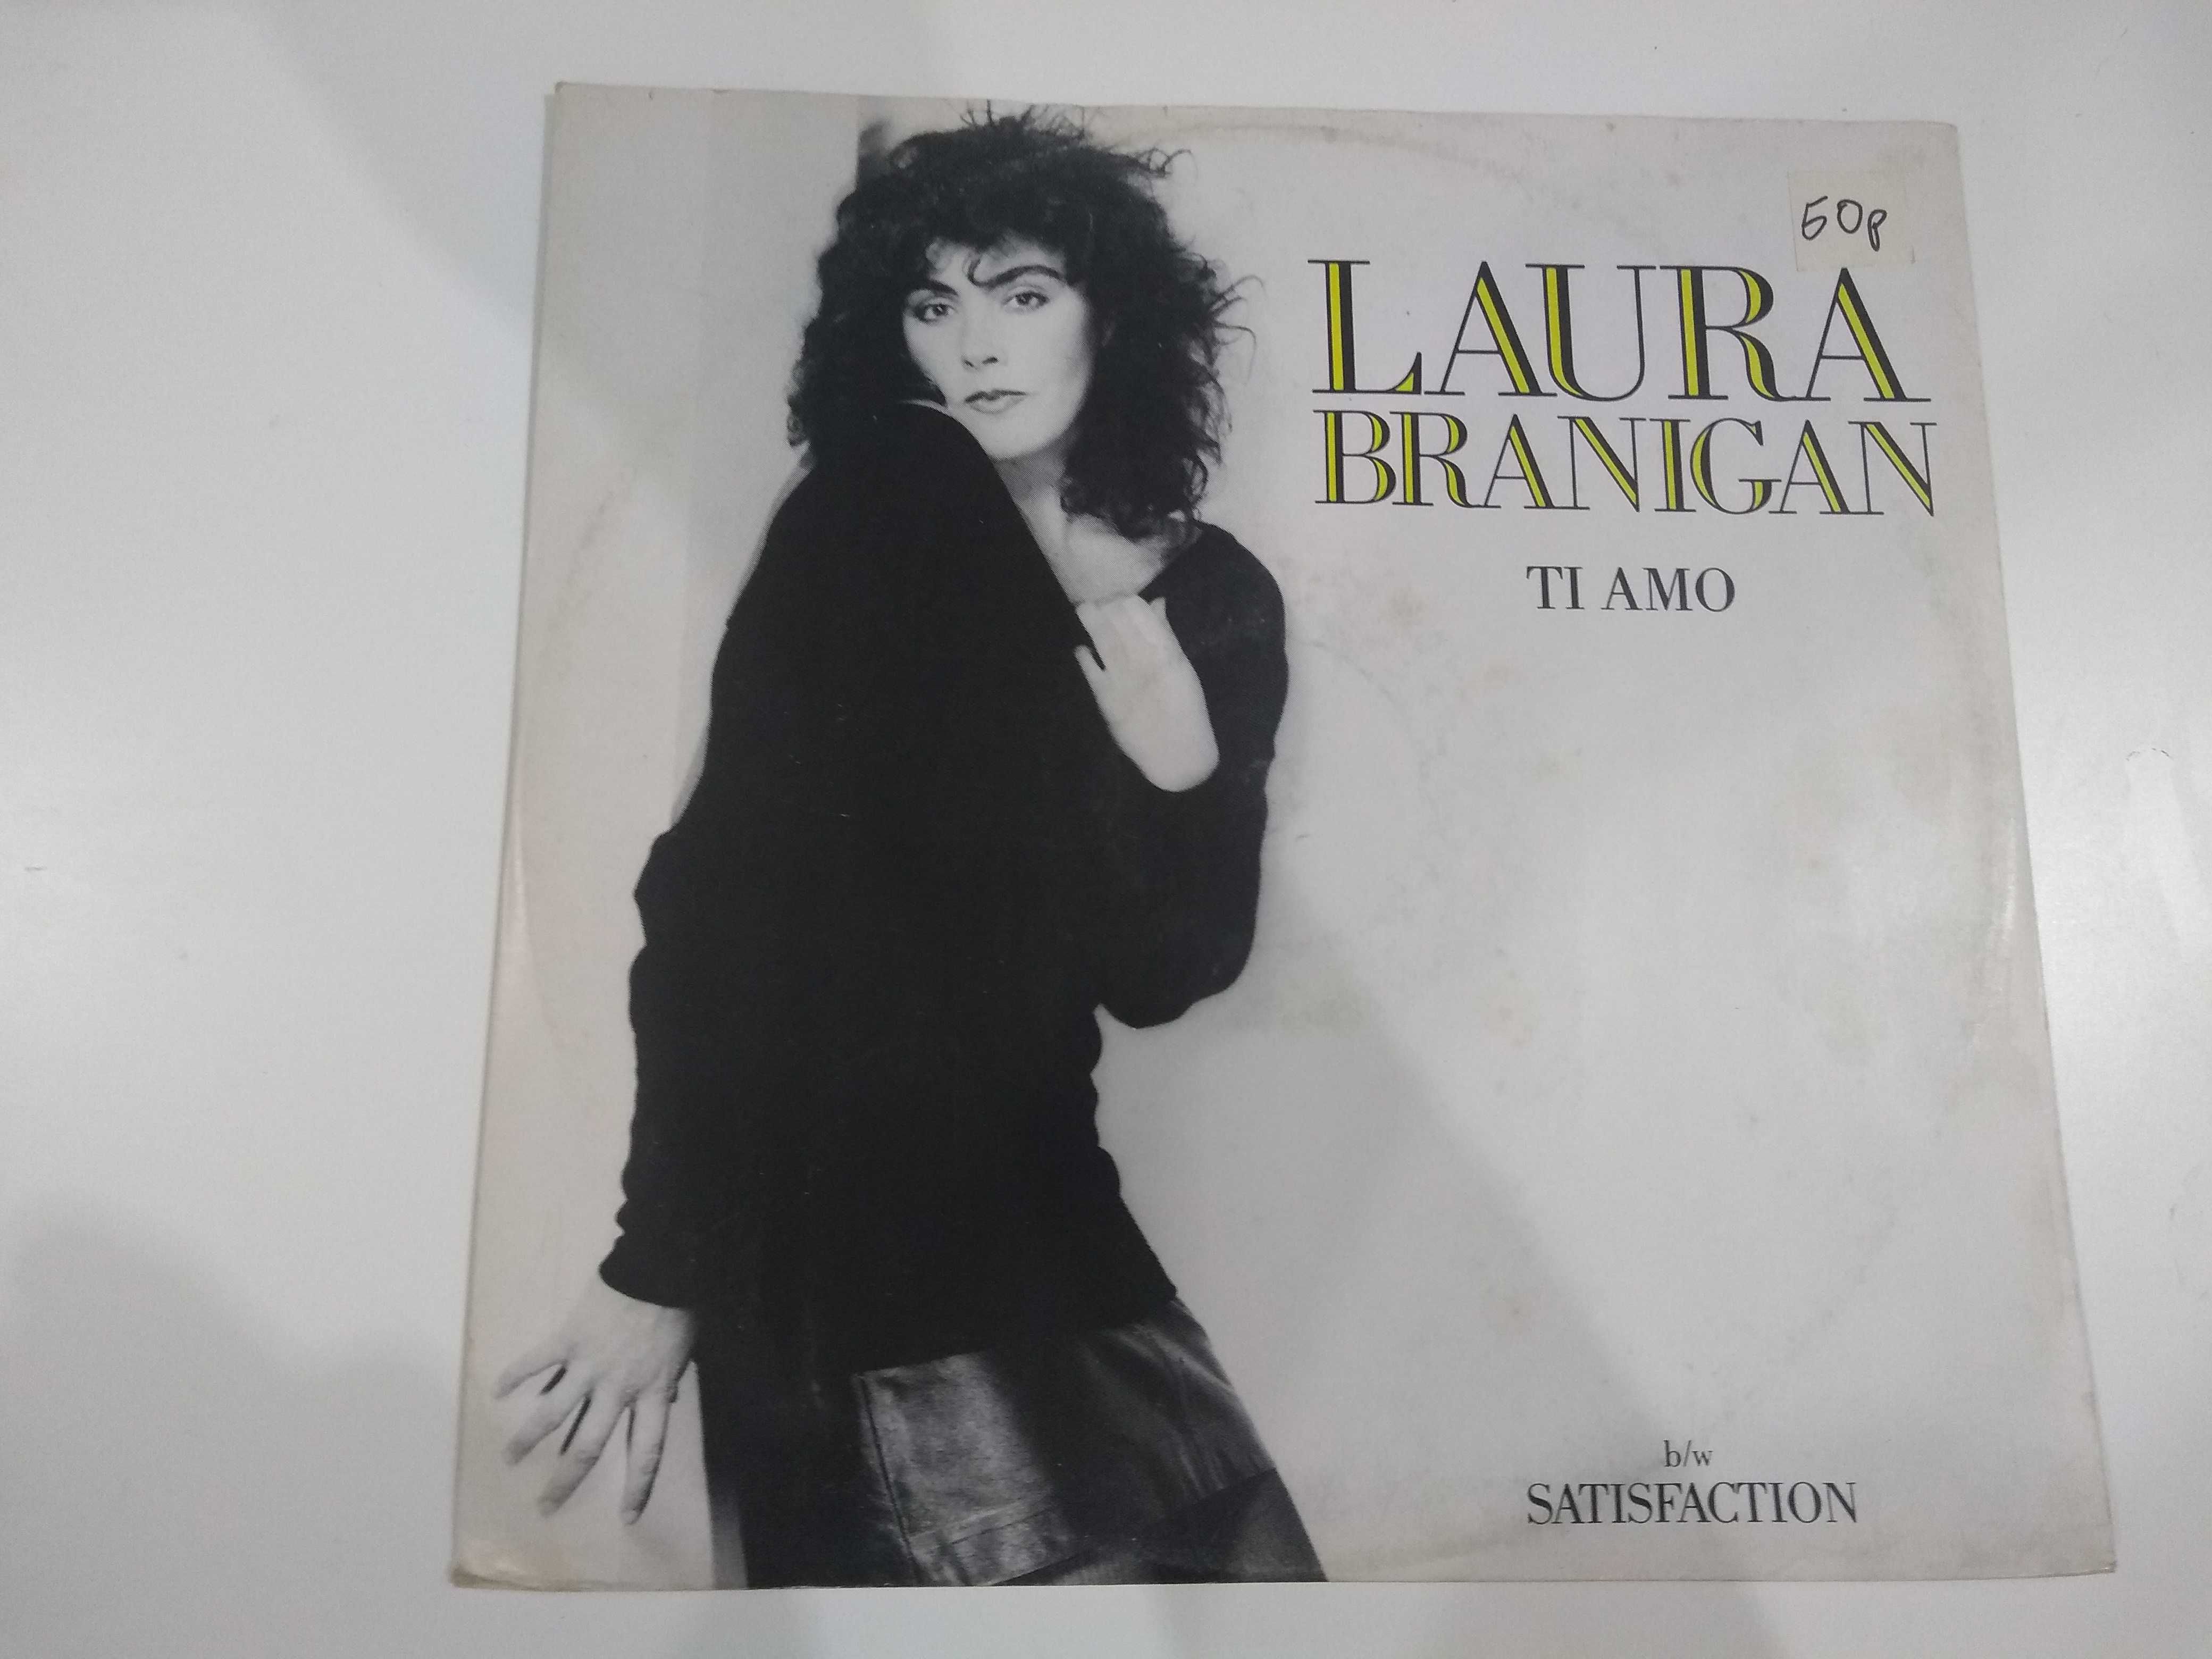 Dobra płyta - Laura Branigan ti amo